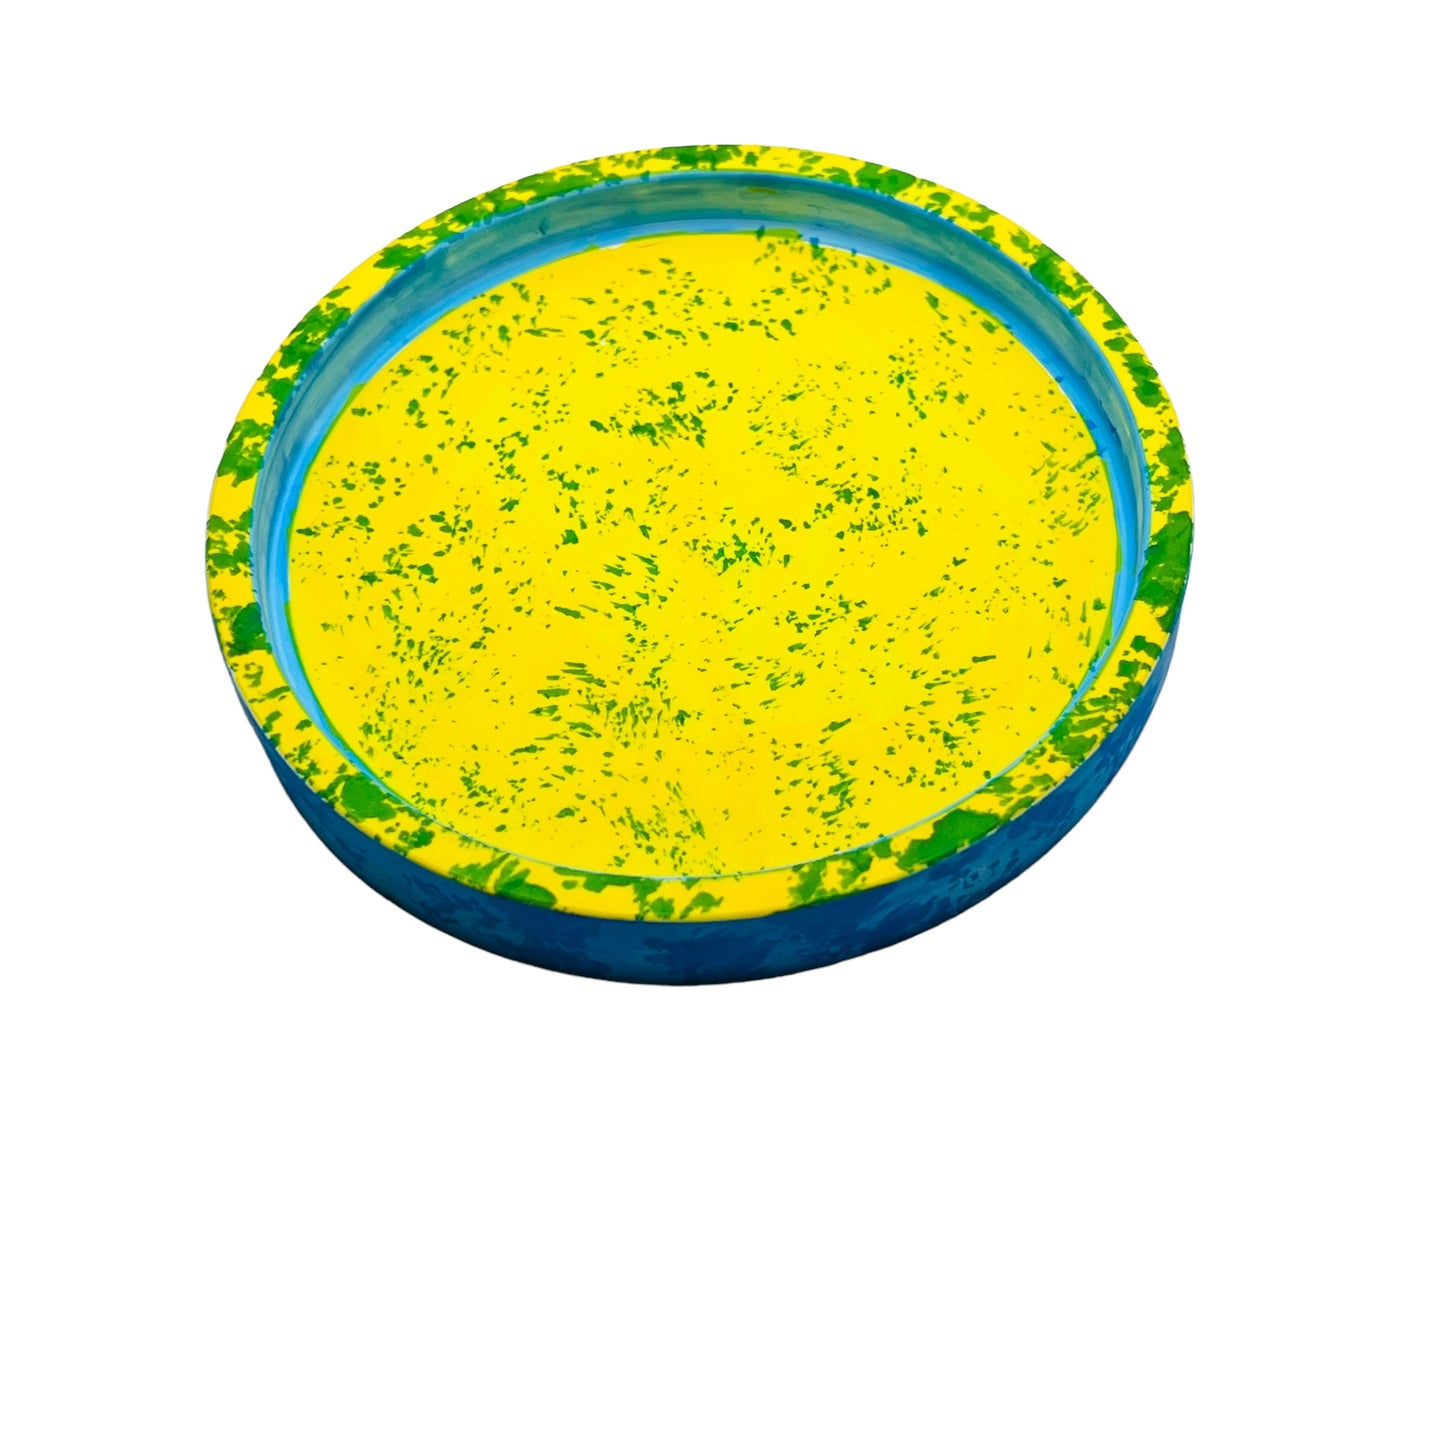 JenDore Handmade Yellow & Blue Splatter Chaos Circular Ceramic Vanity Tray